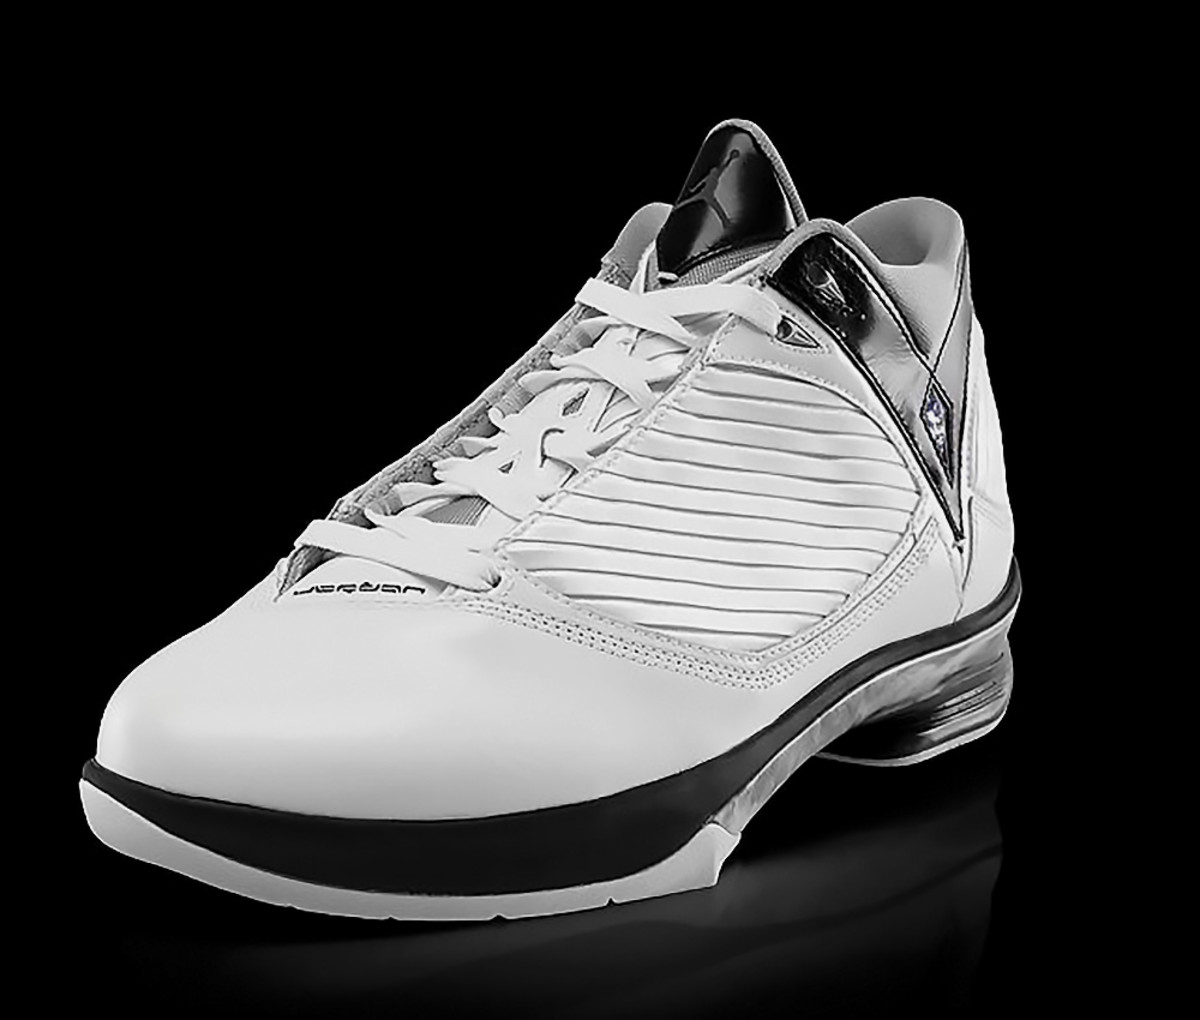 moverse Arriba Hueco Ranking all 33 Air Jordan sneakers - Sports Illustrated